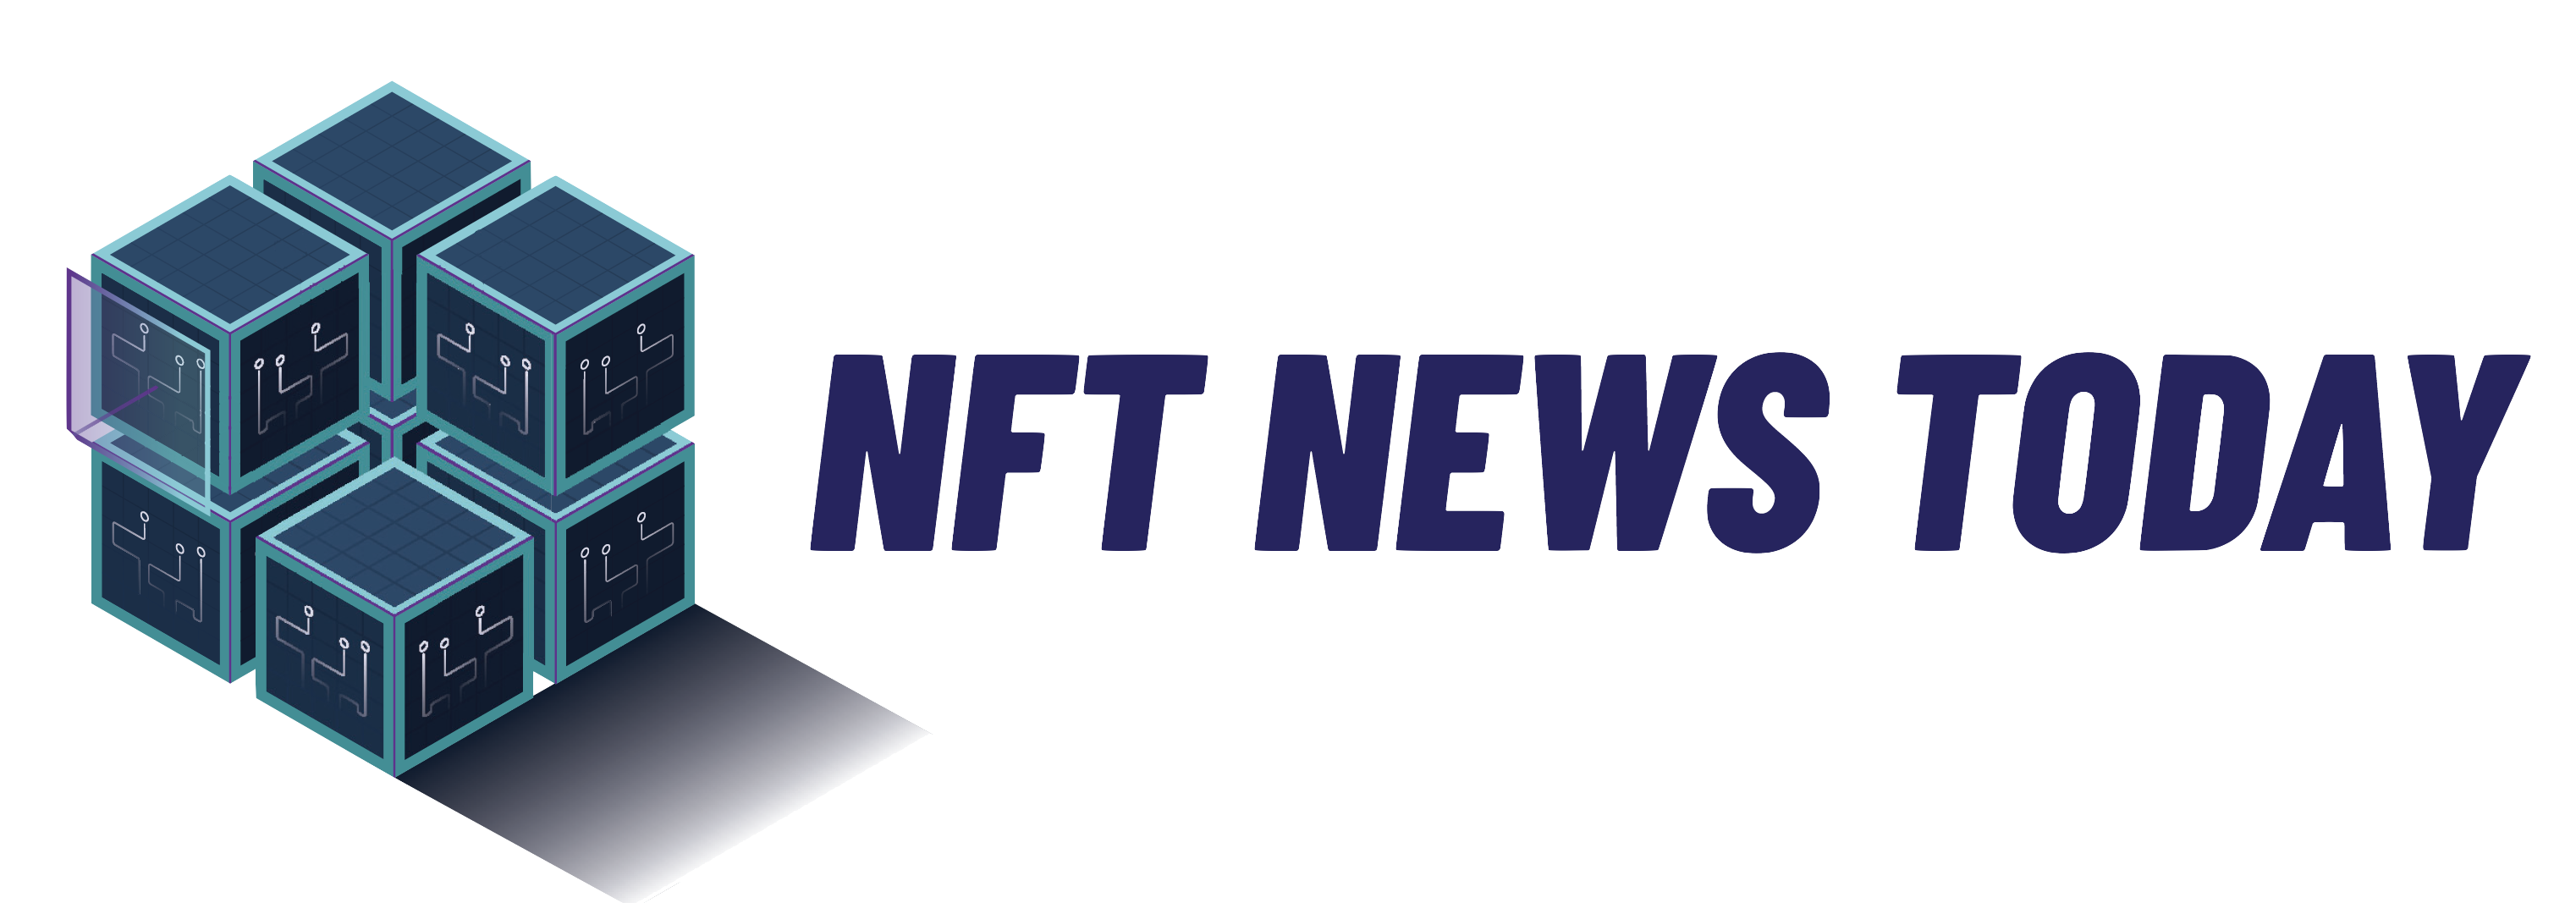 how-do-i-create-nft-art-nft-news-today